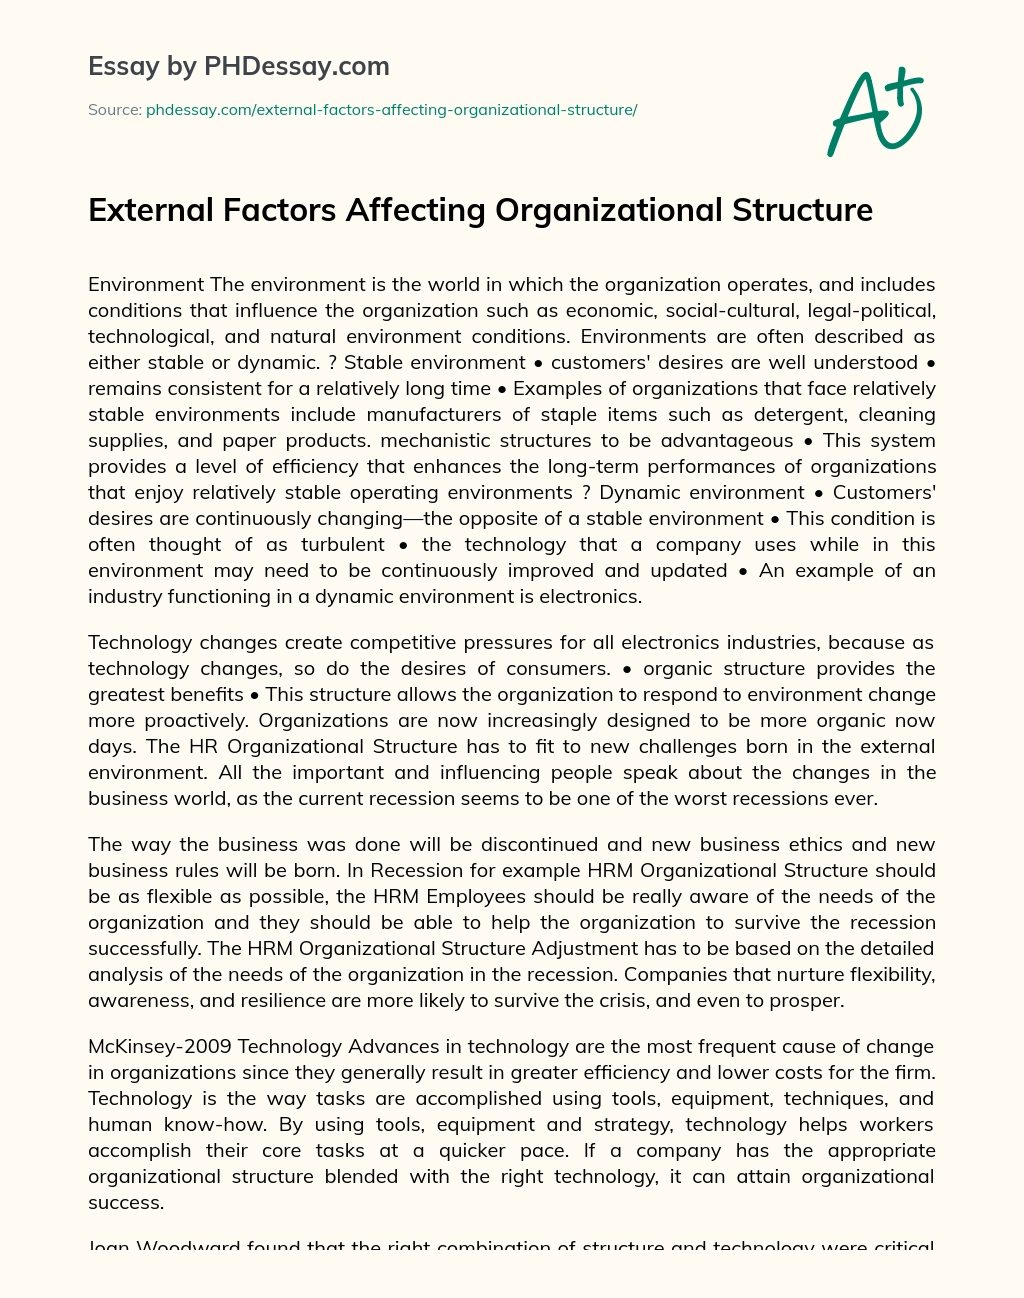 External Factors Affecting Organizational Structure essay